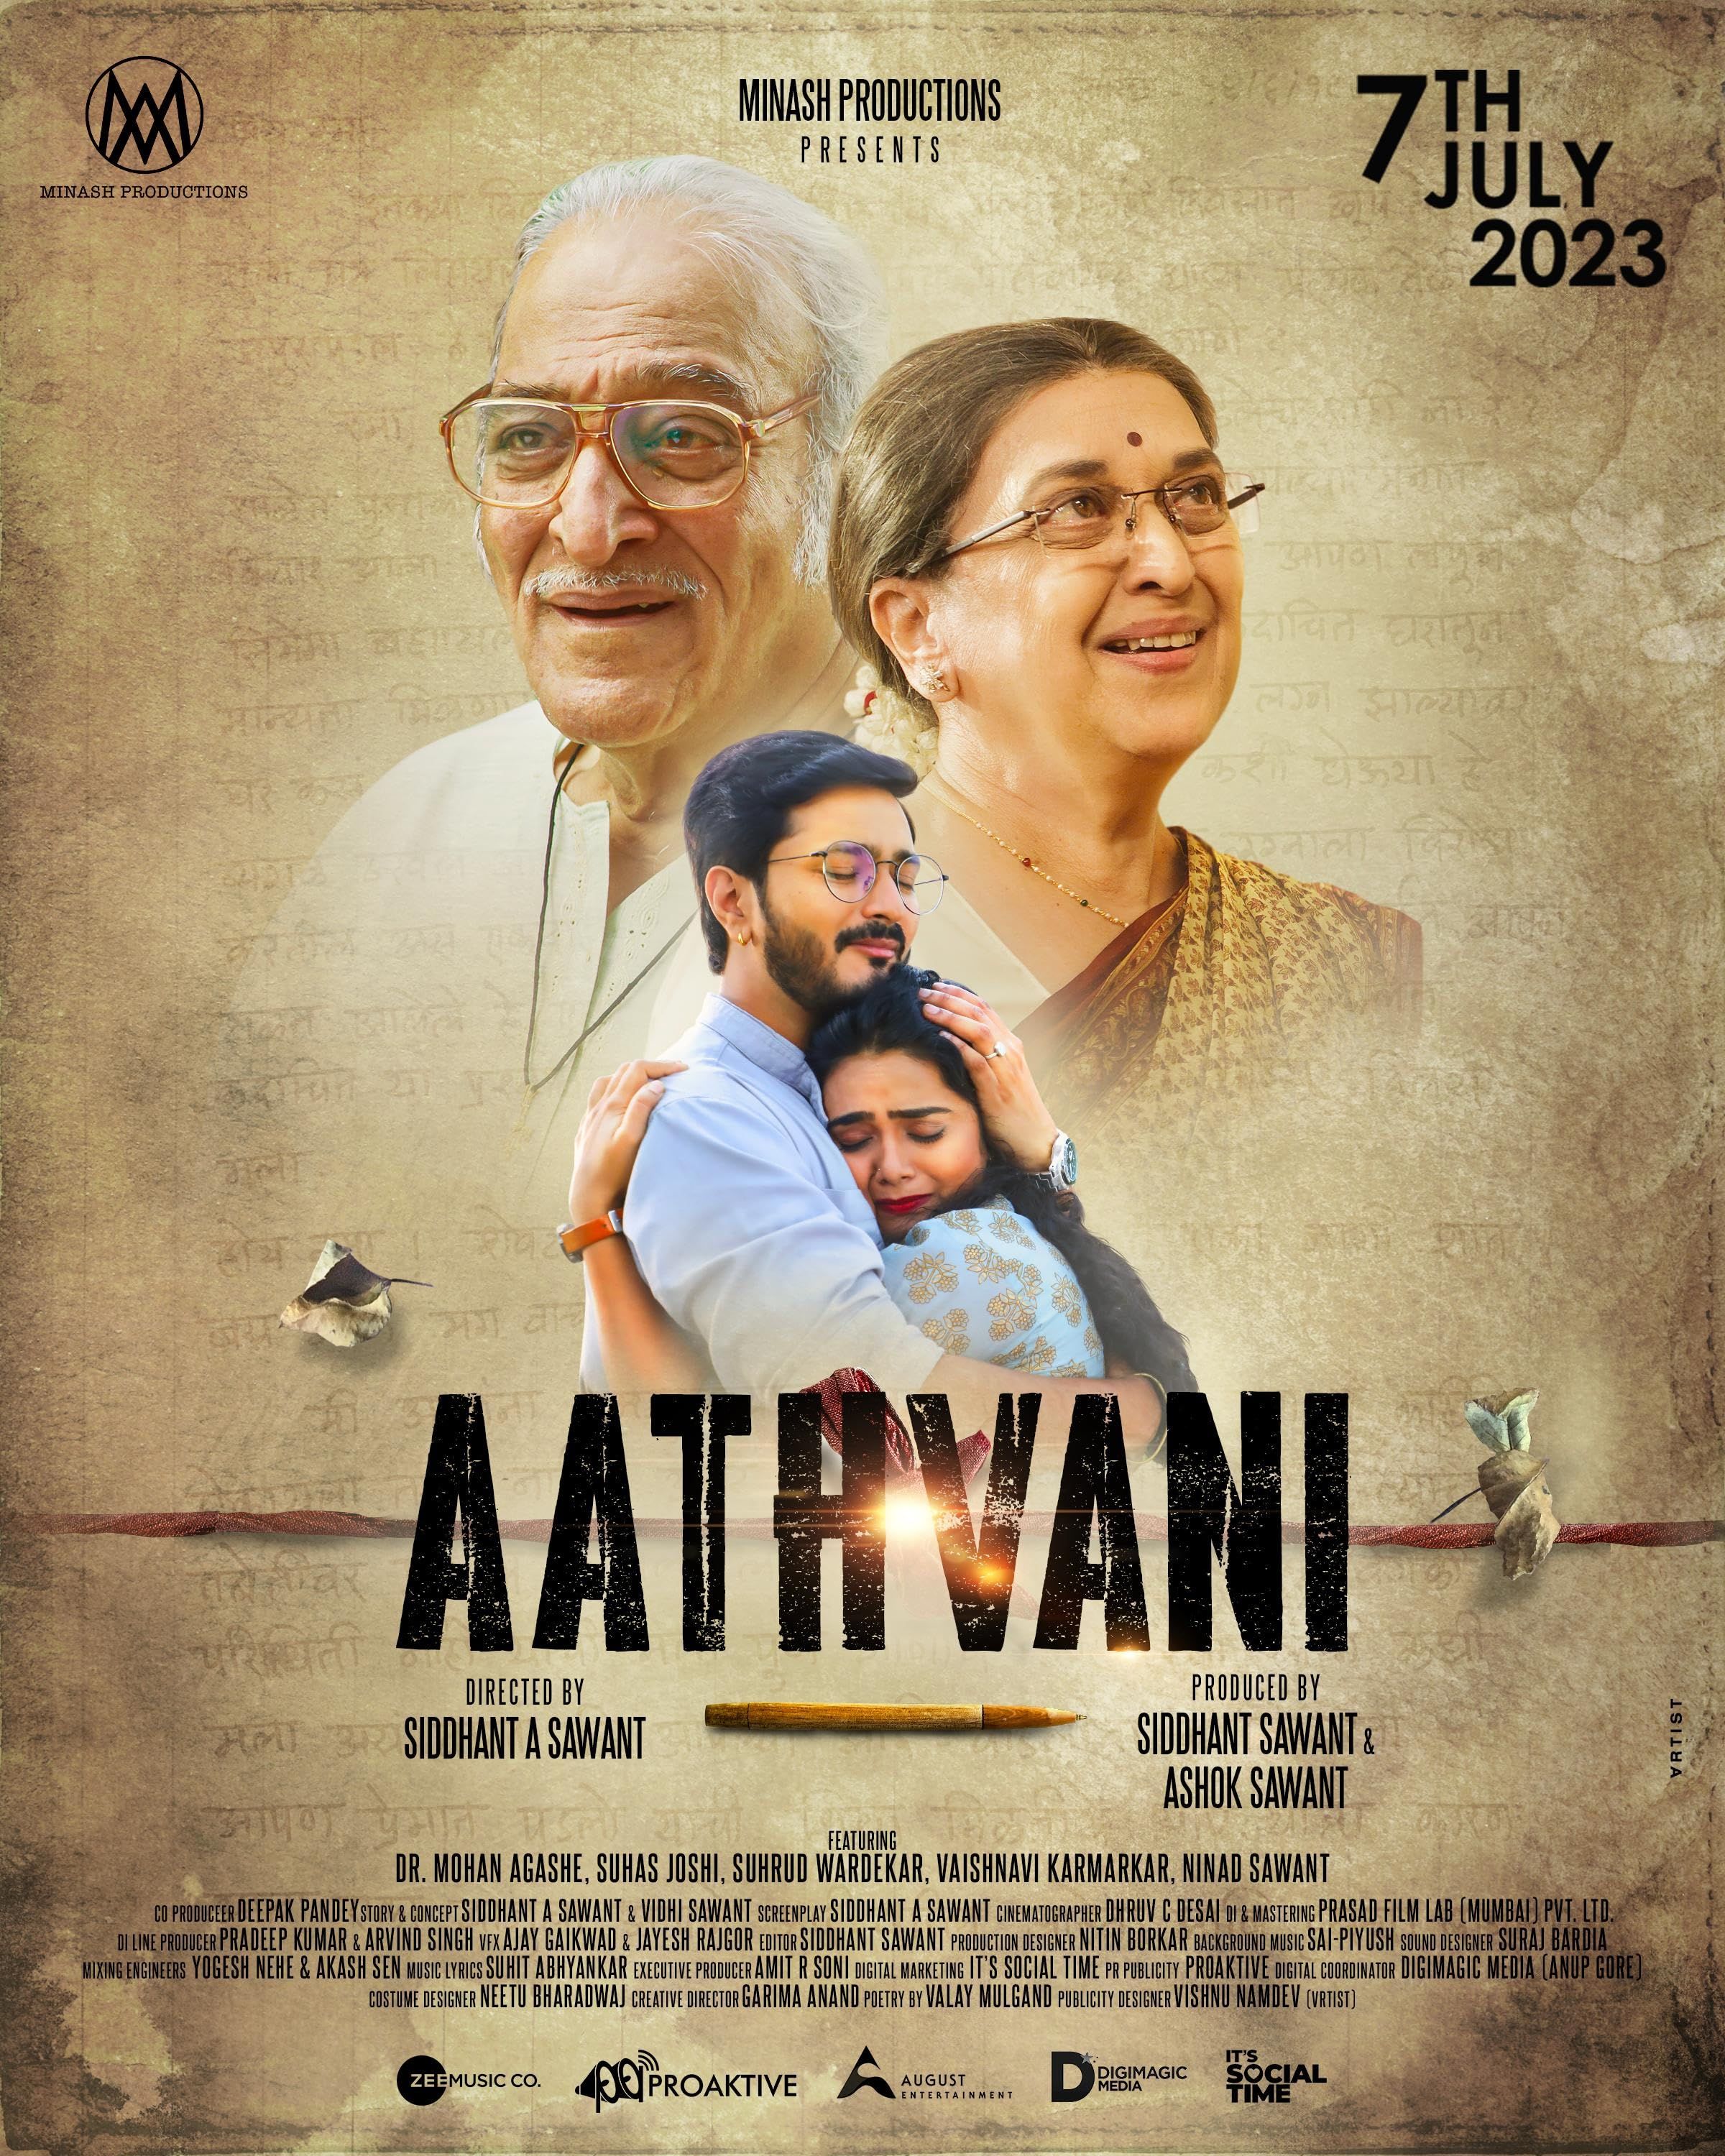 Aathvani (2023) Marathi Movie download full movie